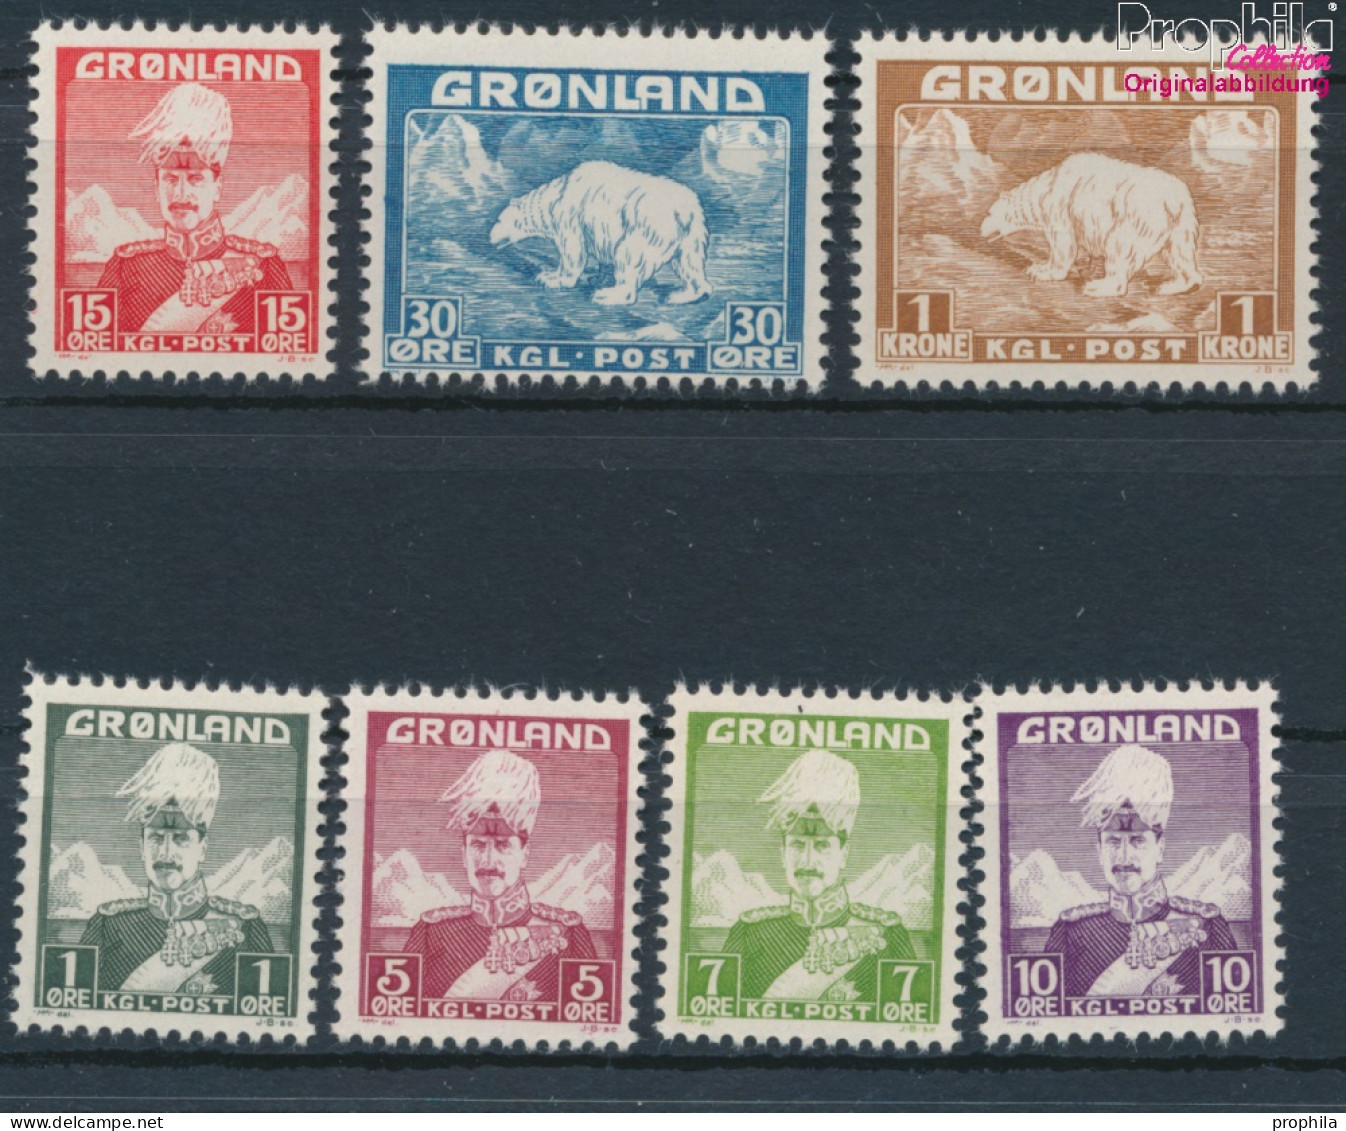 Dänemark - Grönland Postfrisch Christian X. 1938 König Christian X.  (10174226 - Oblitérés